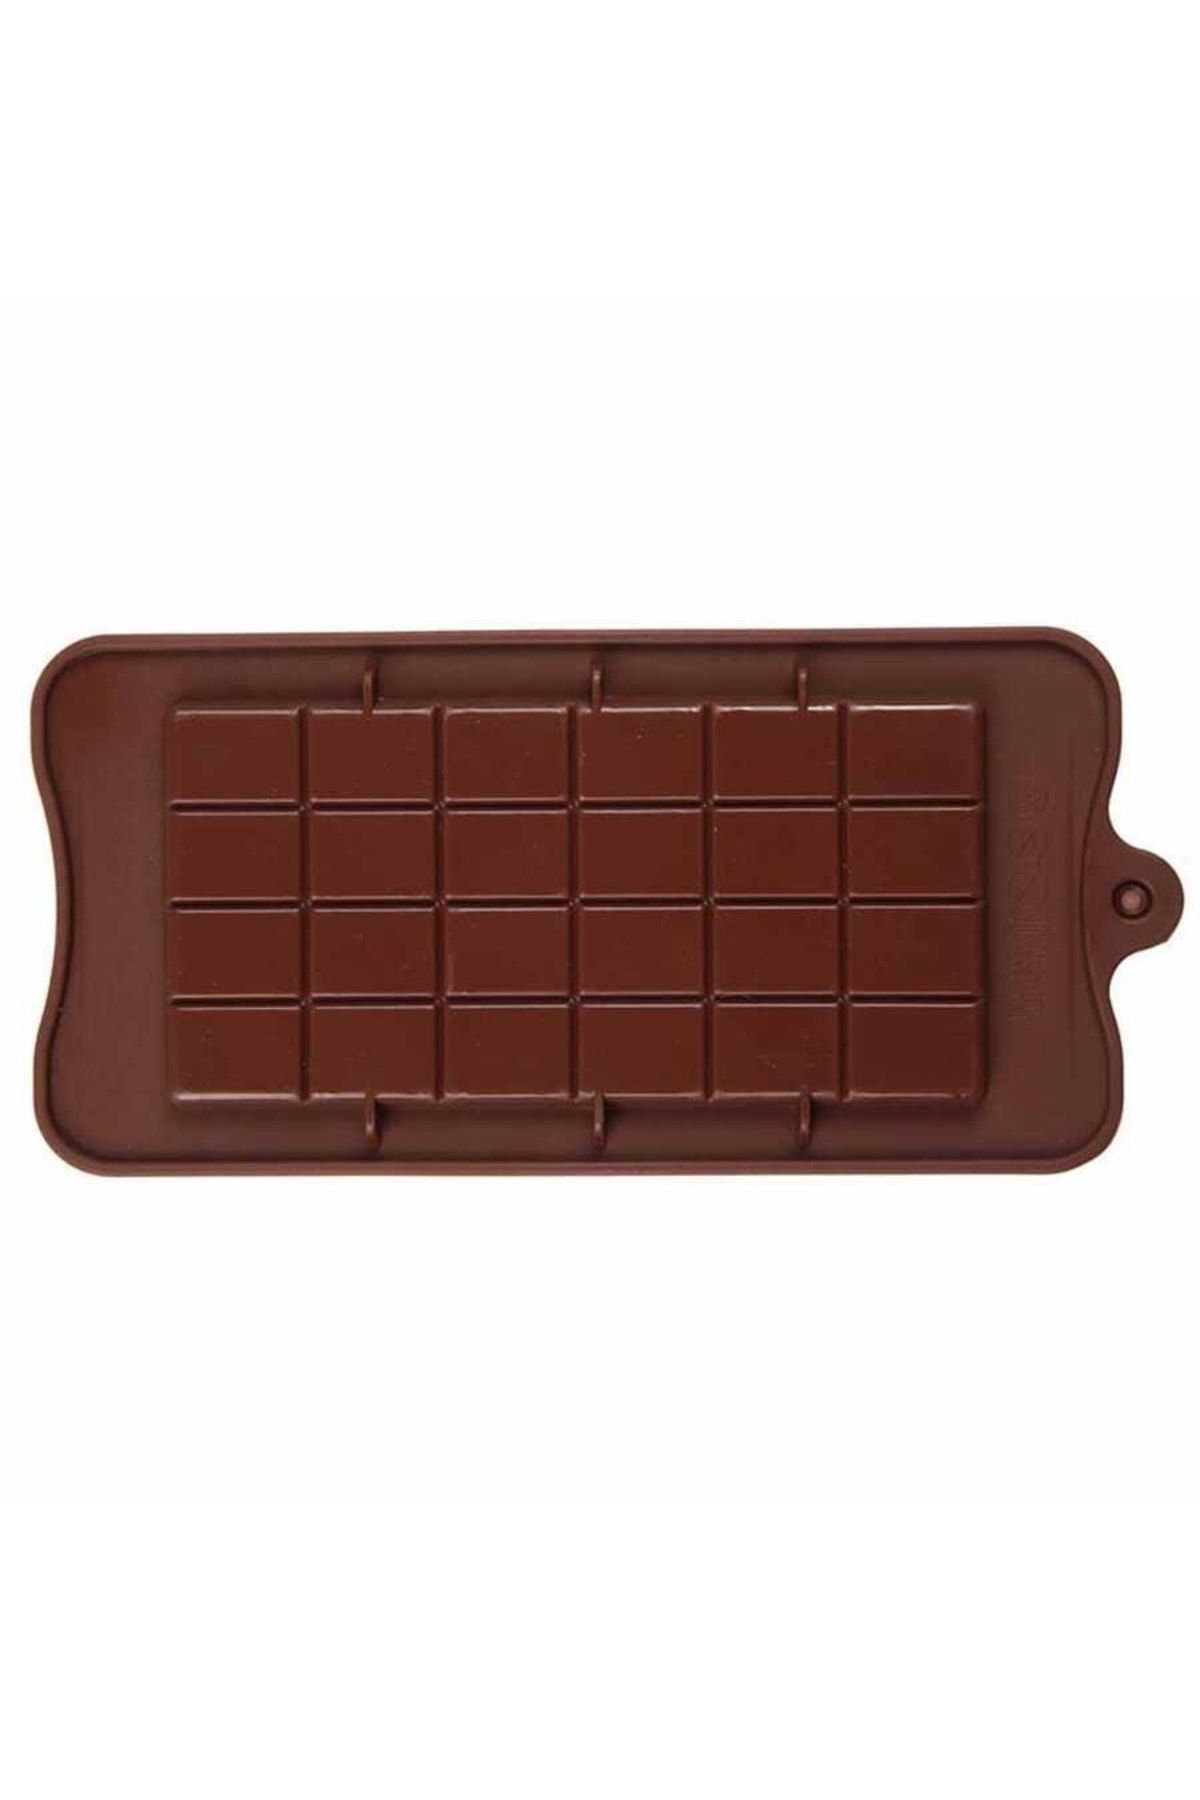 Epinox Silikon Çikolata Tablet Kalıp 22x10,5 Cm